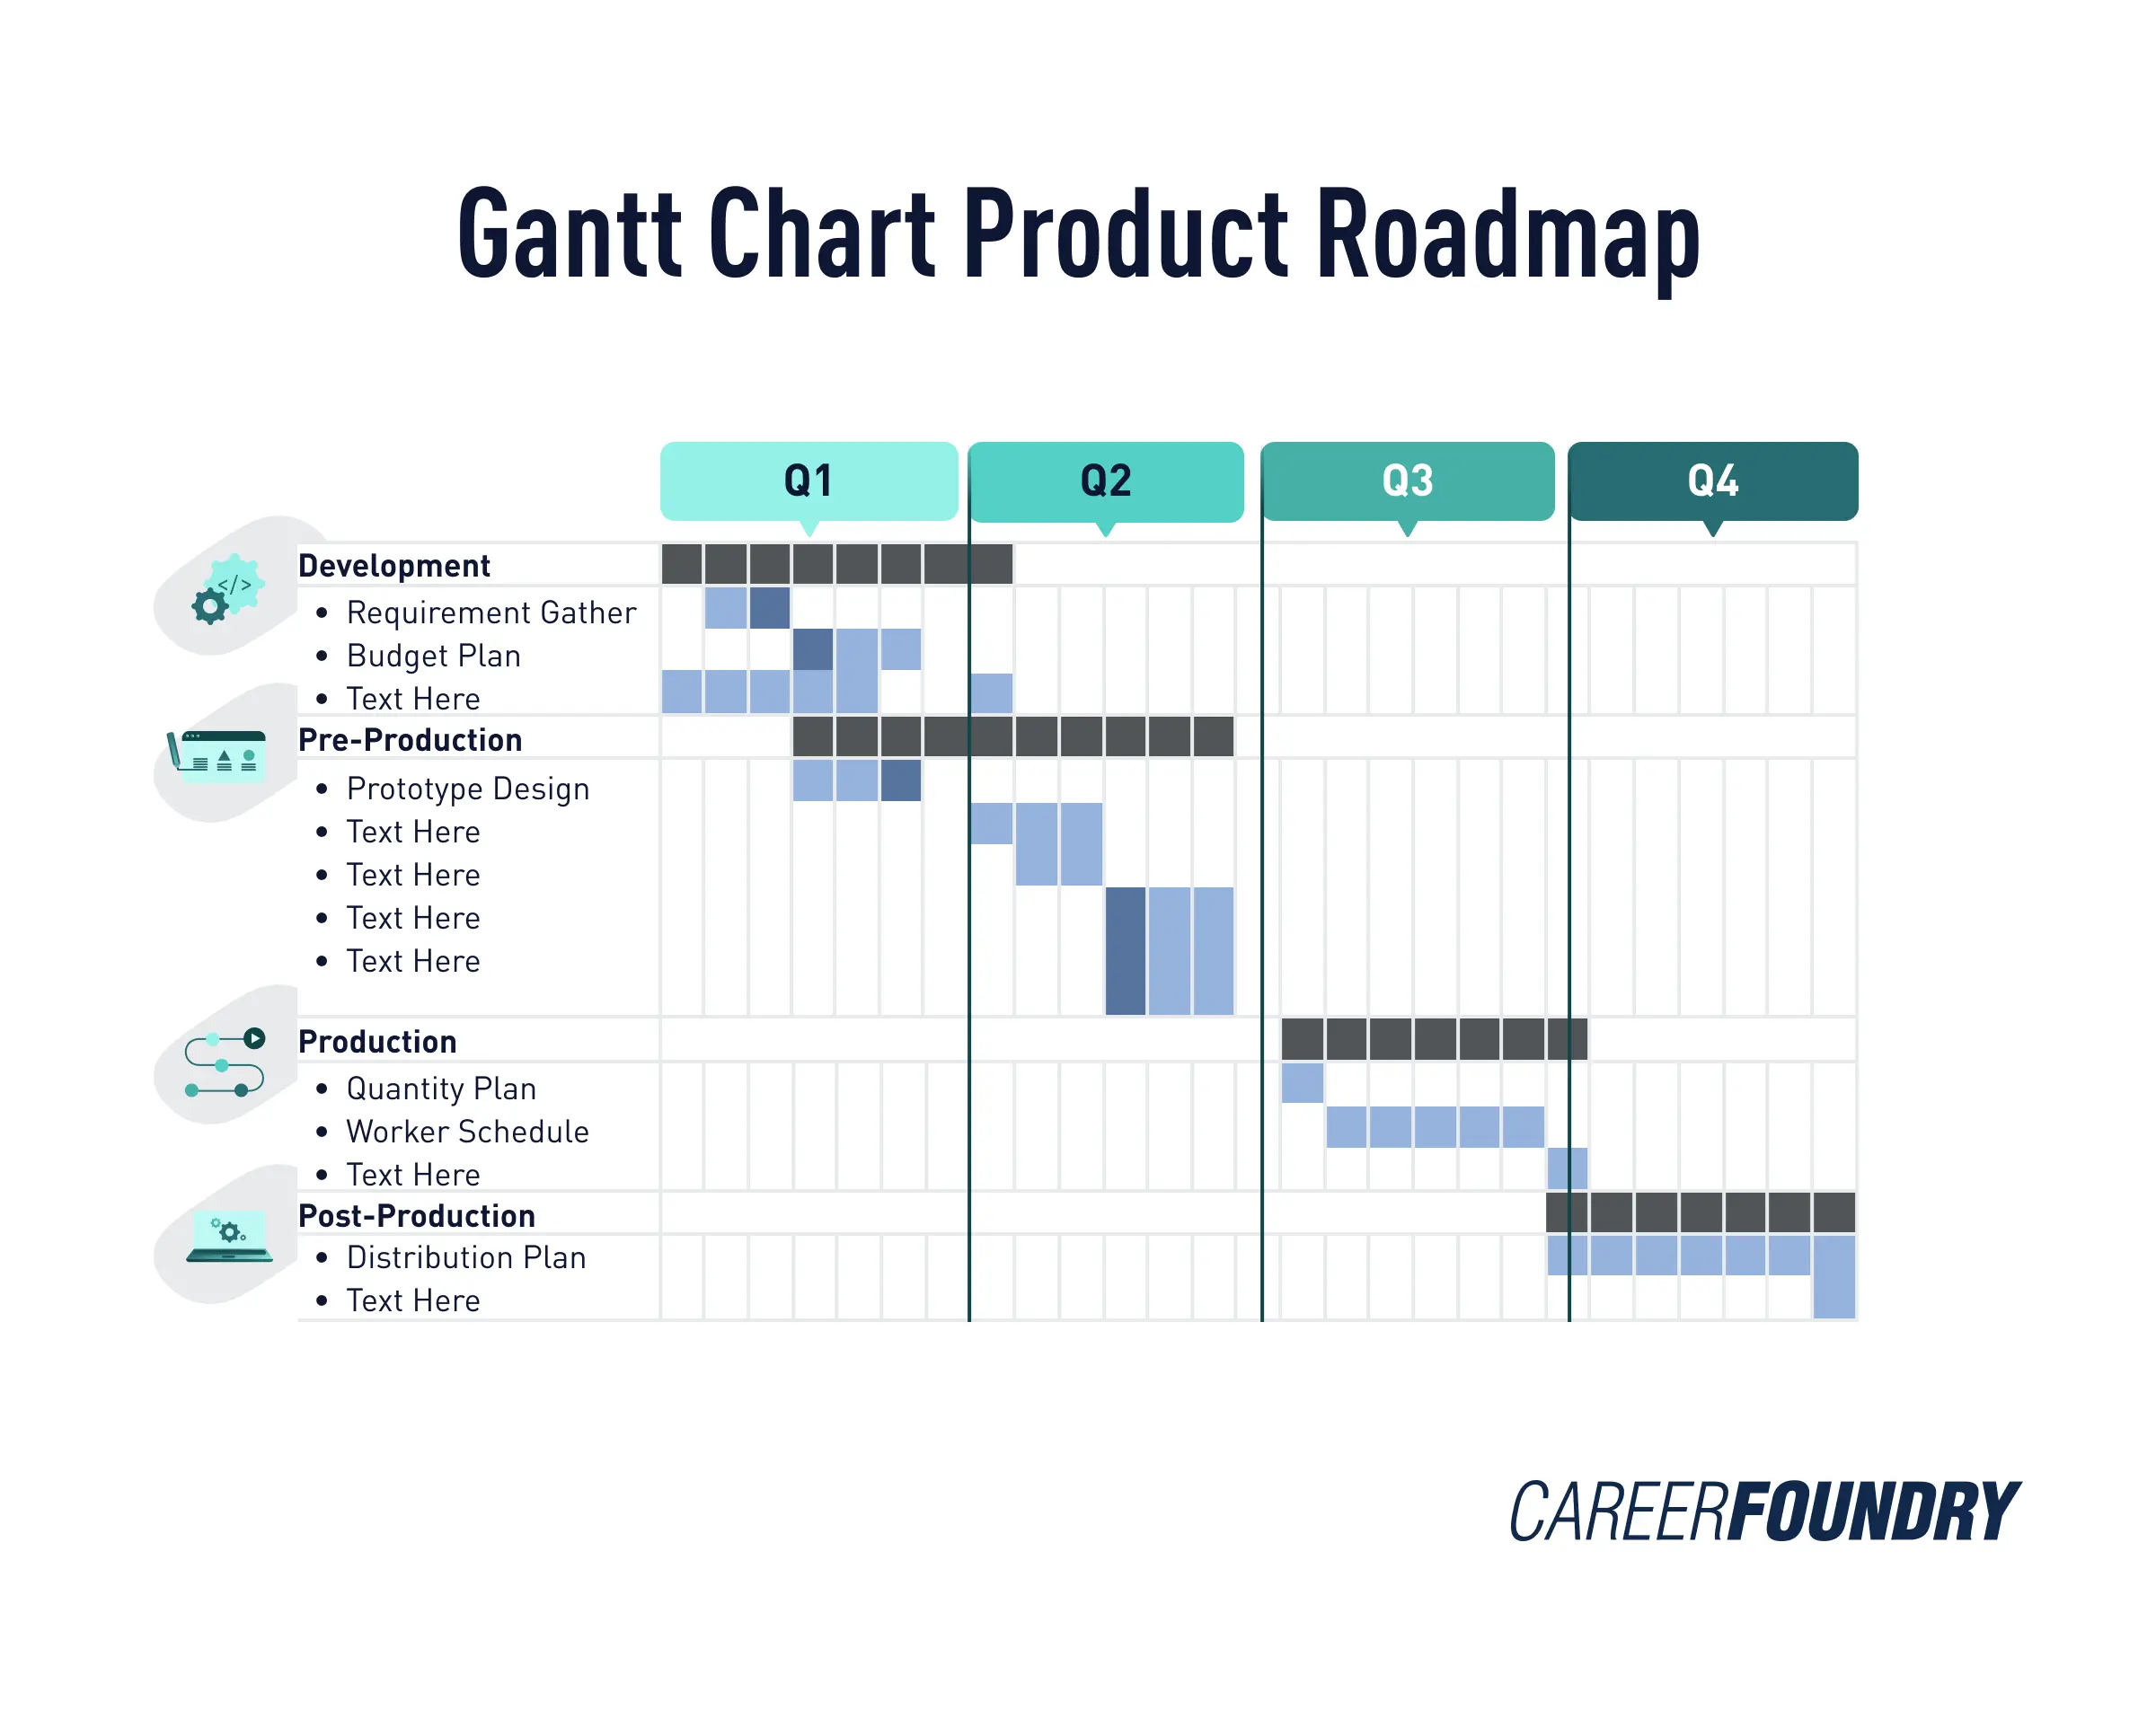 An example of a Gantt product roadmap chart.